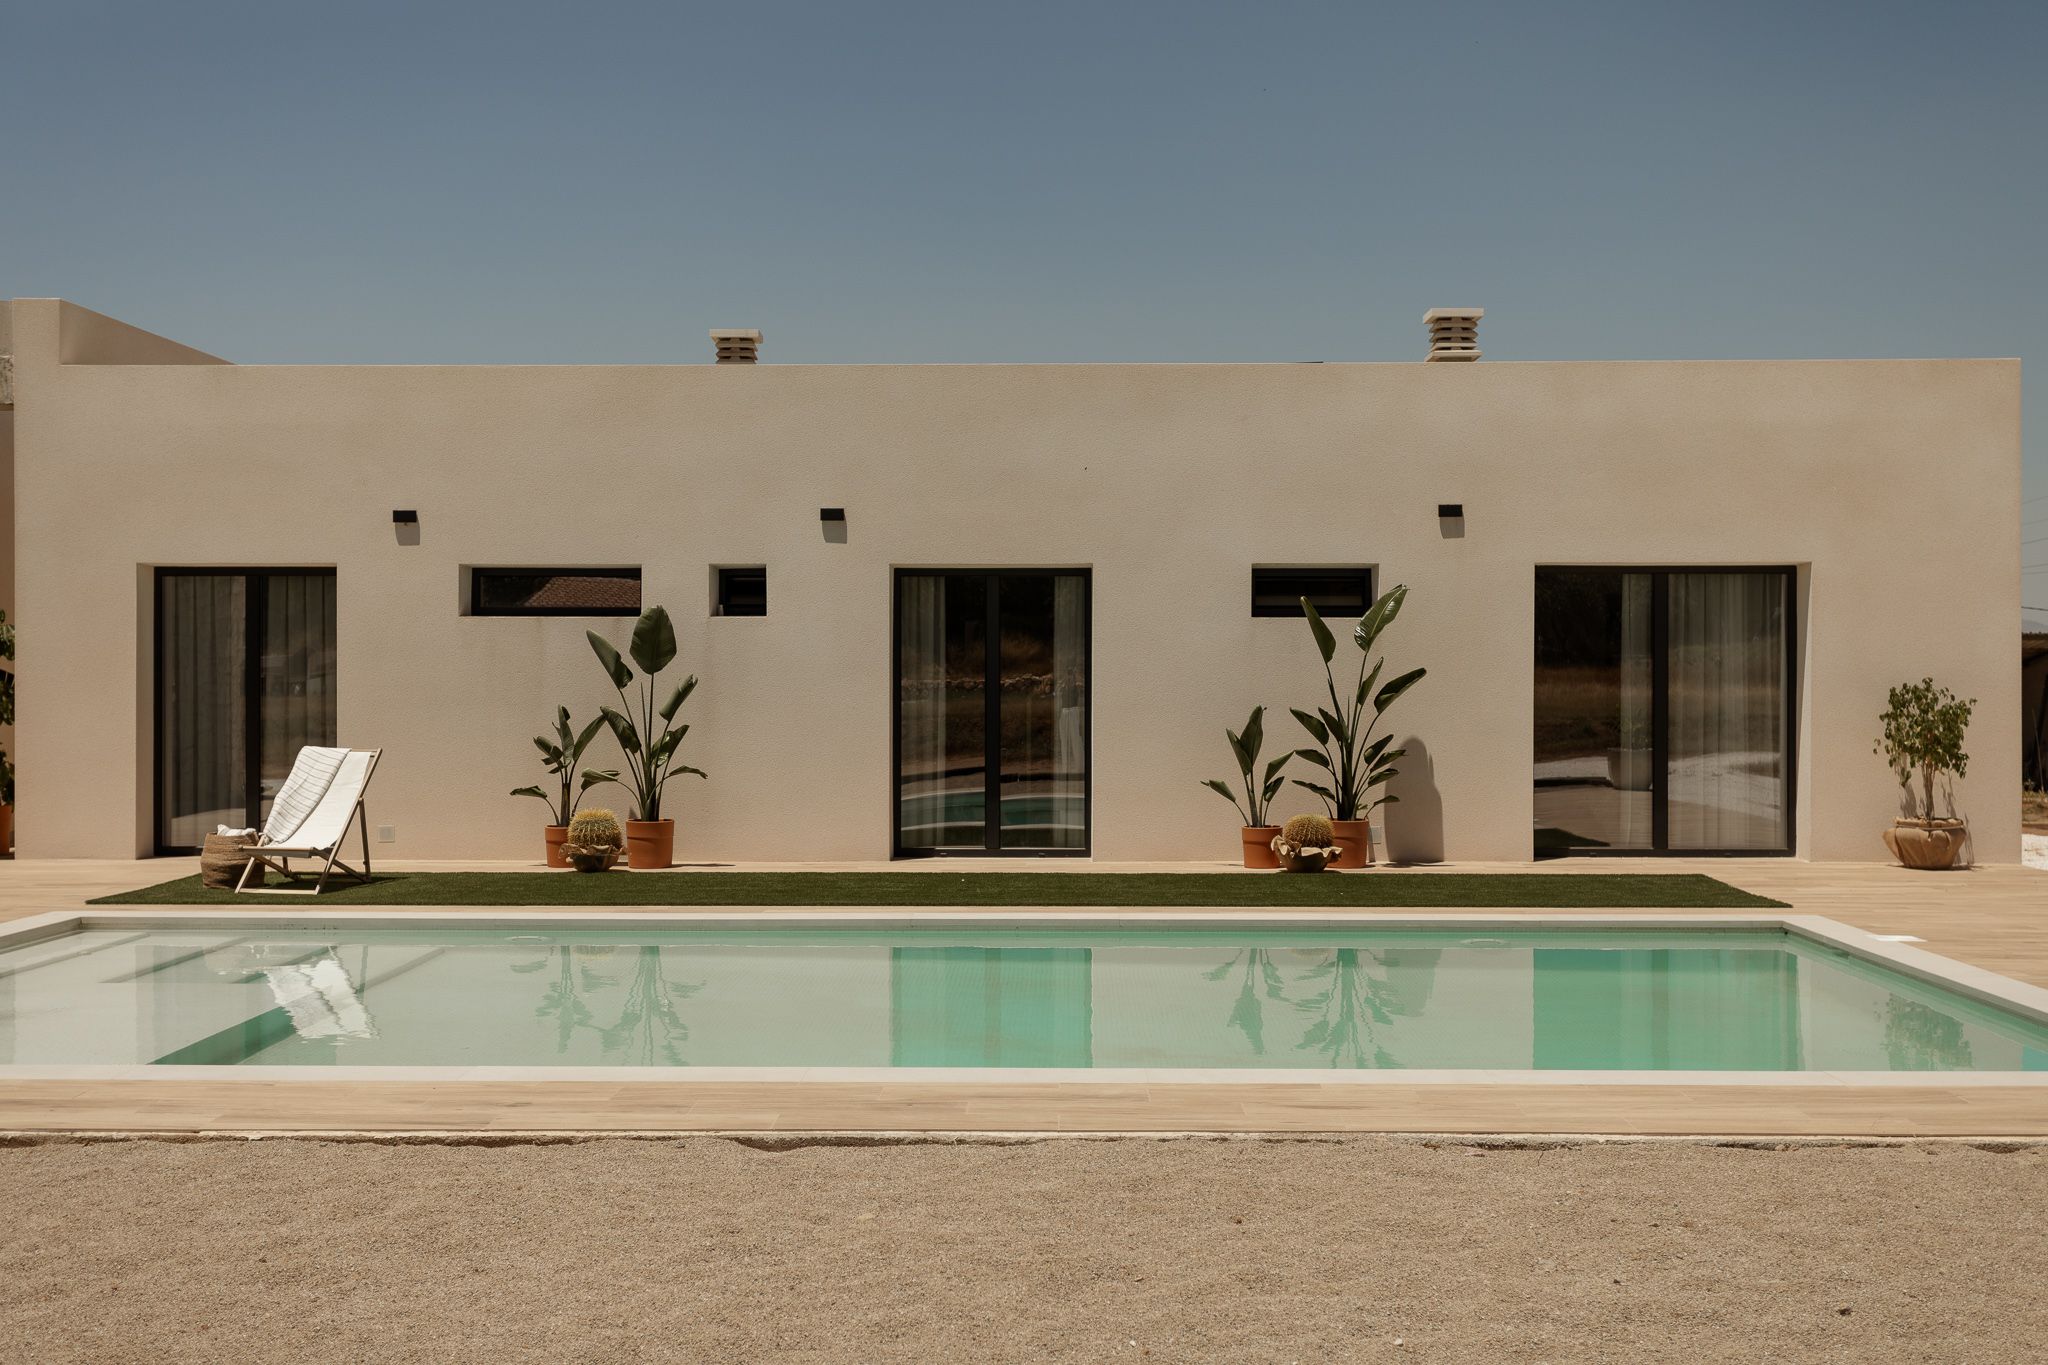 Una casa moderna con piscina decorada en tonos neutros